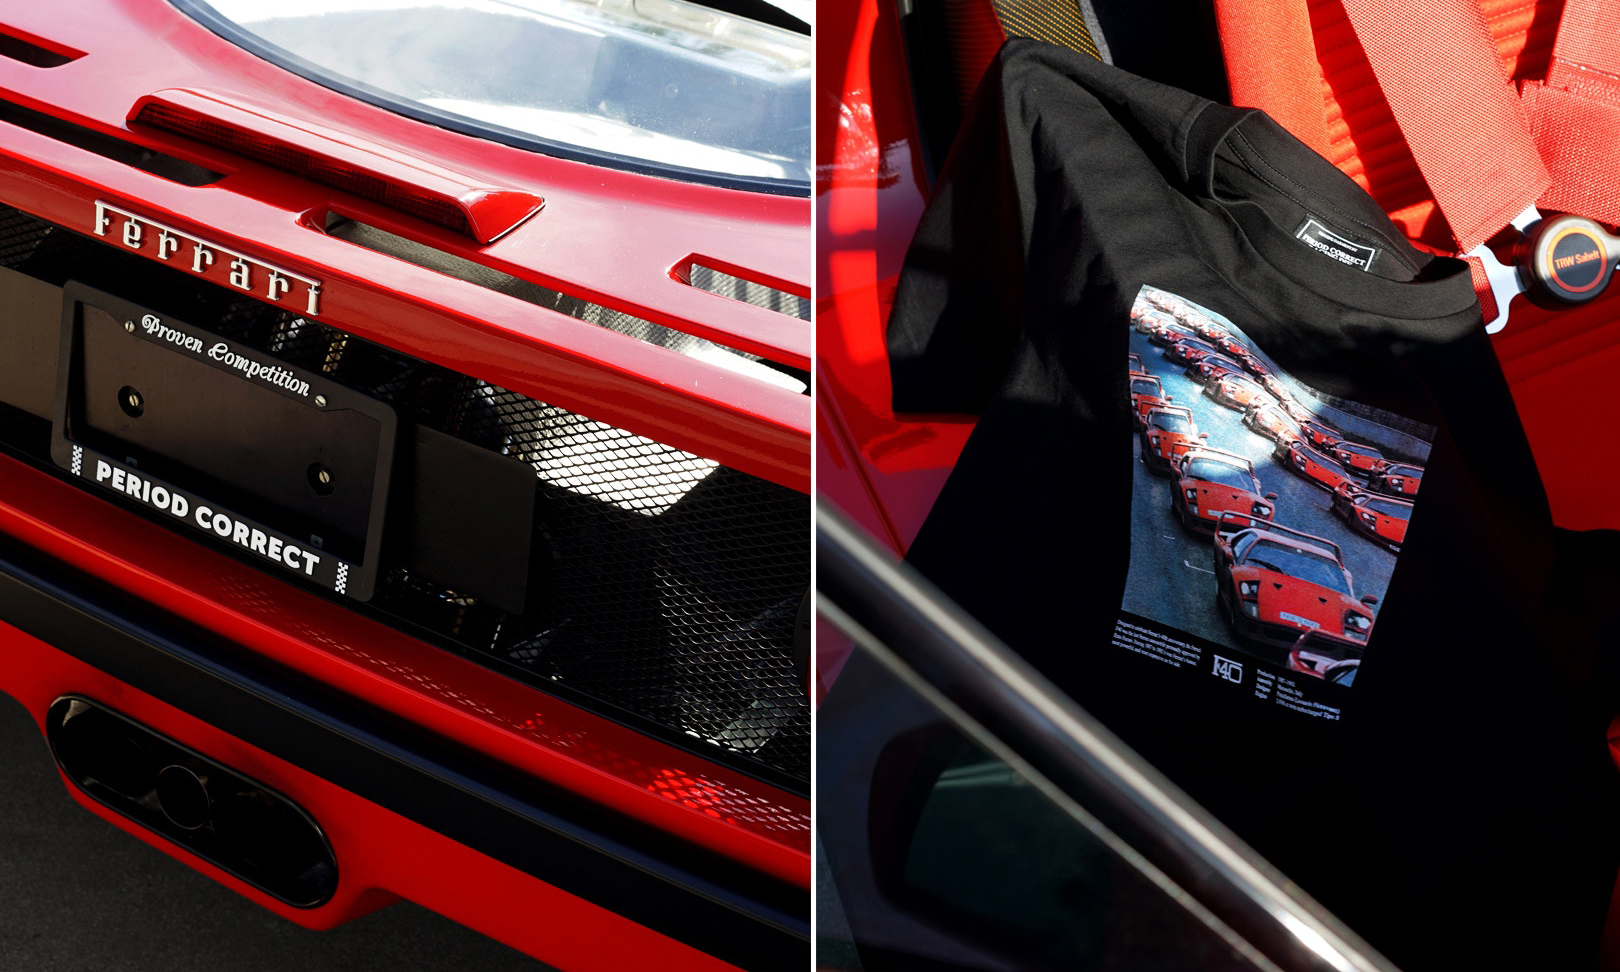 Period Correct 发布以 Ferrari F40 为灵感的系列